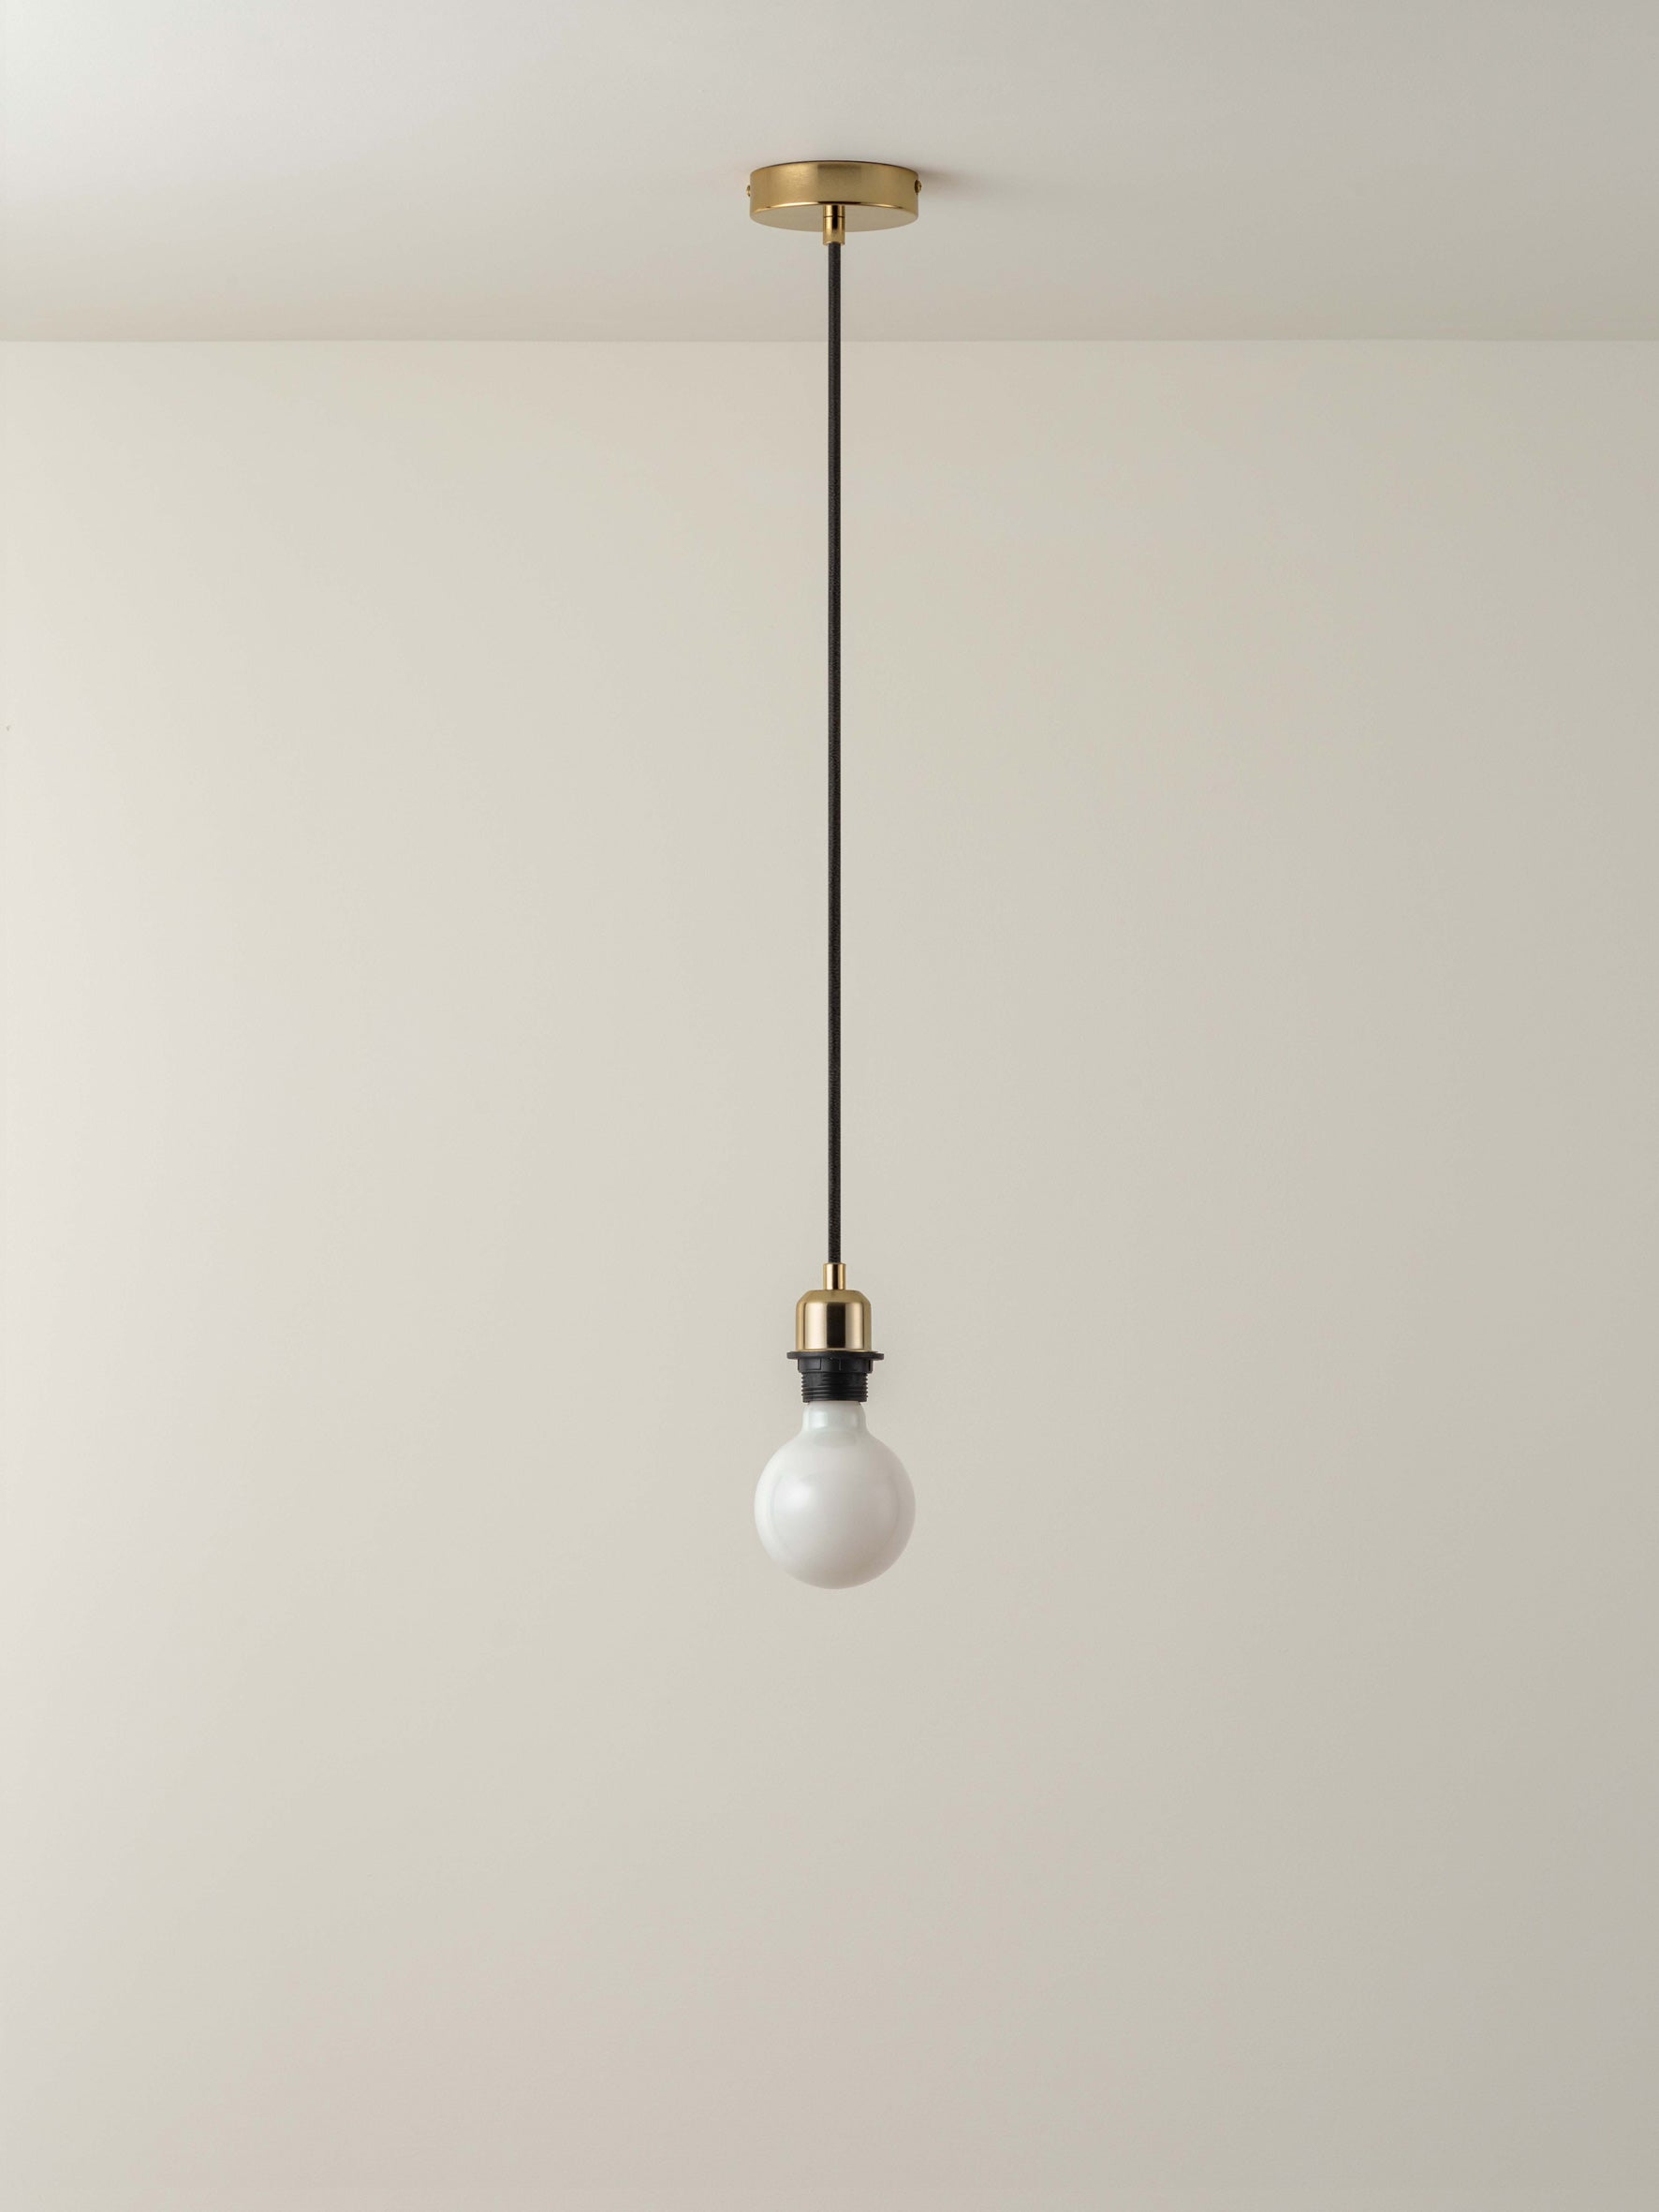 Capel - 1 light brass drop cap lampholder kit | Ceiling Light | Lights & Lamps Inc | Modern Affordable Designer Lighting | USA